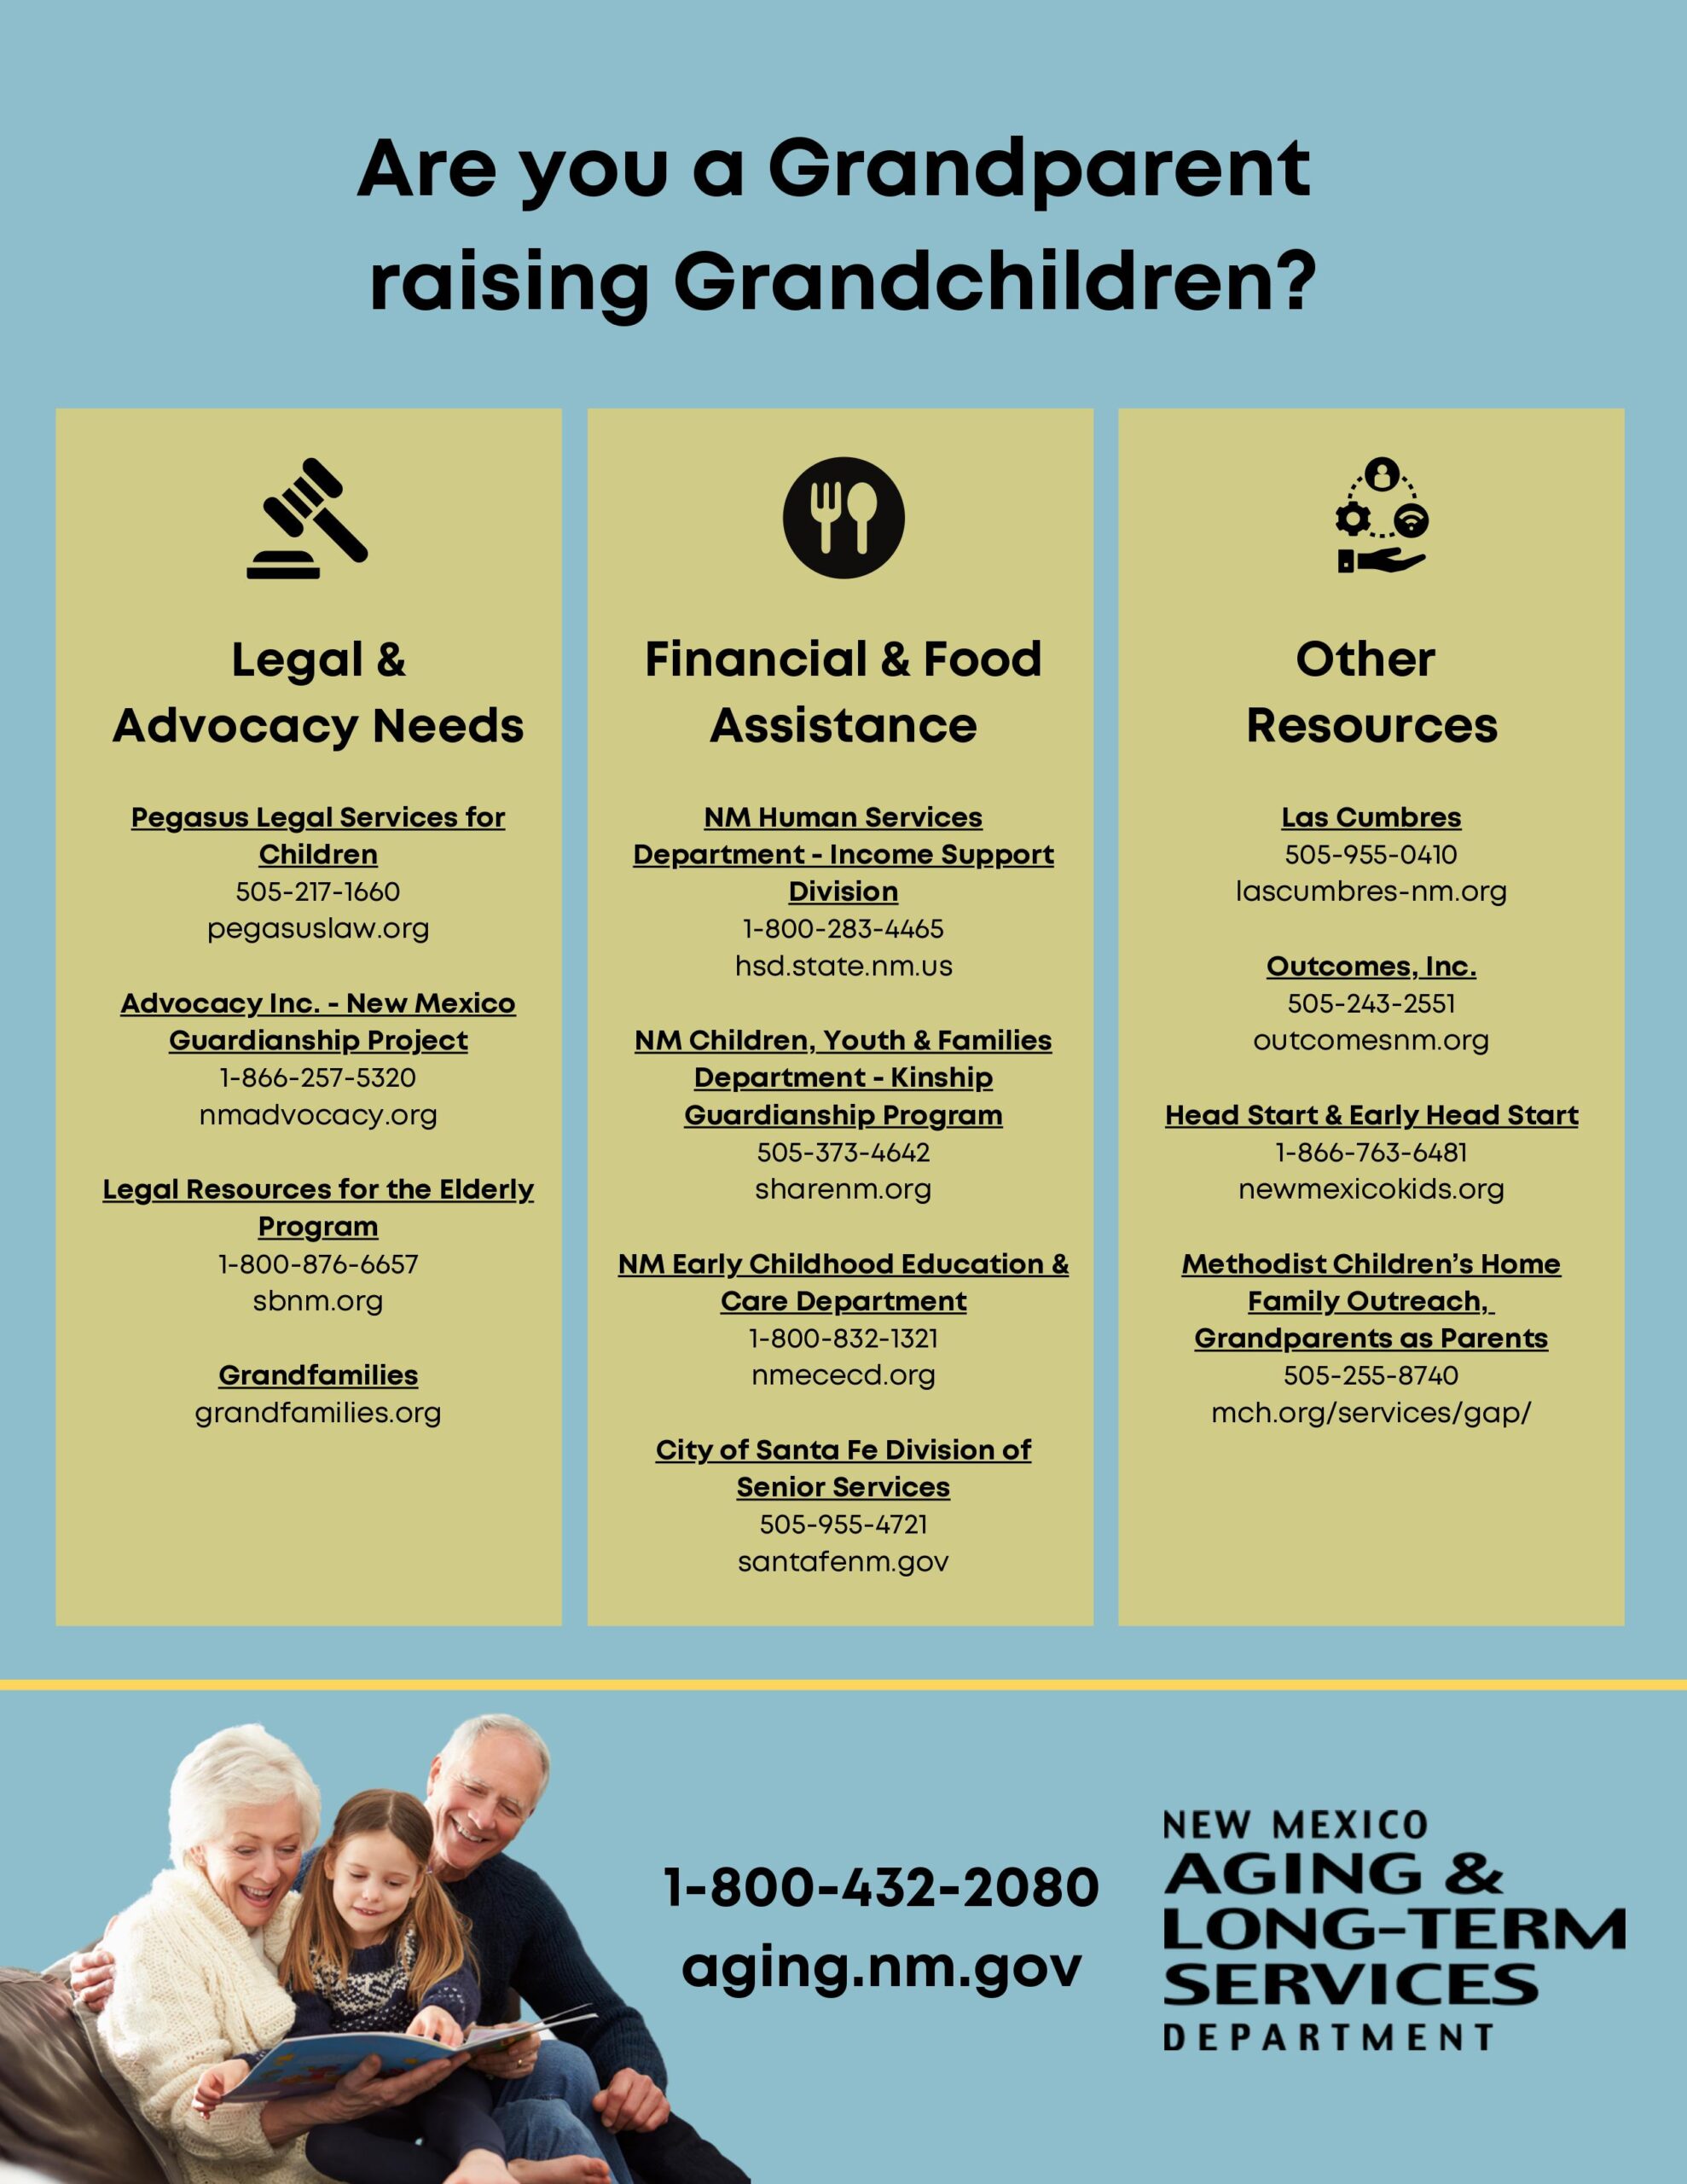 Are you a Grandparent Raising Grandchildren flyer